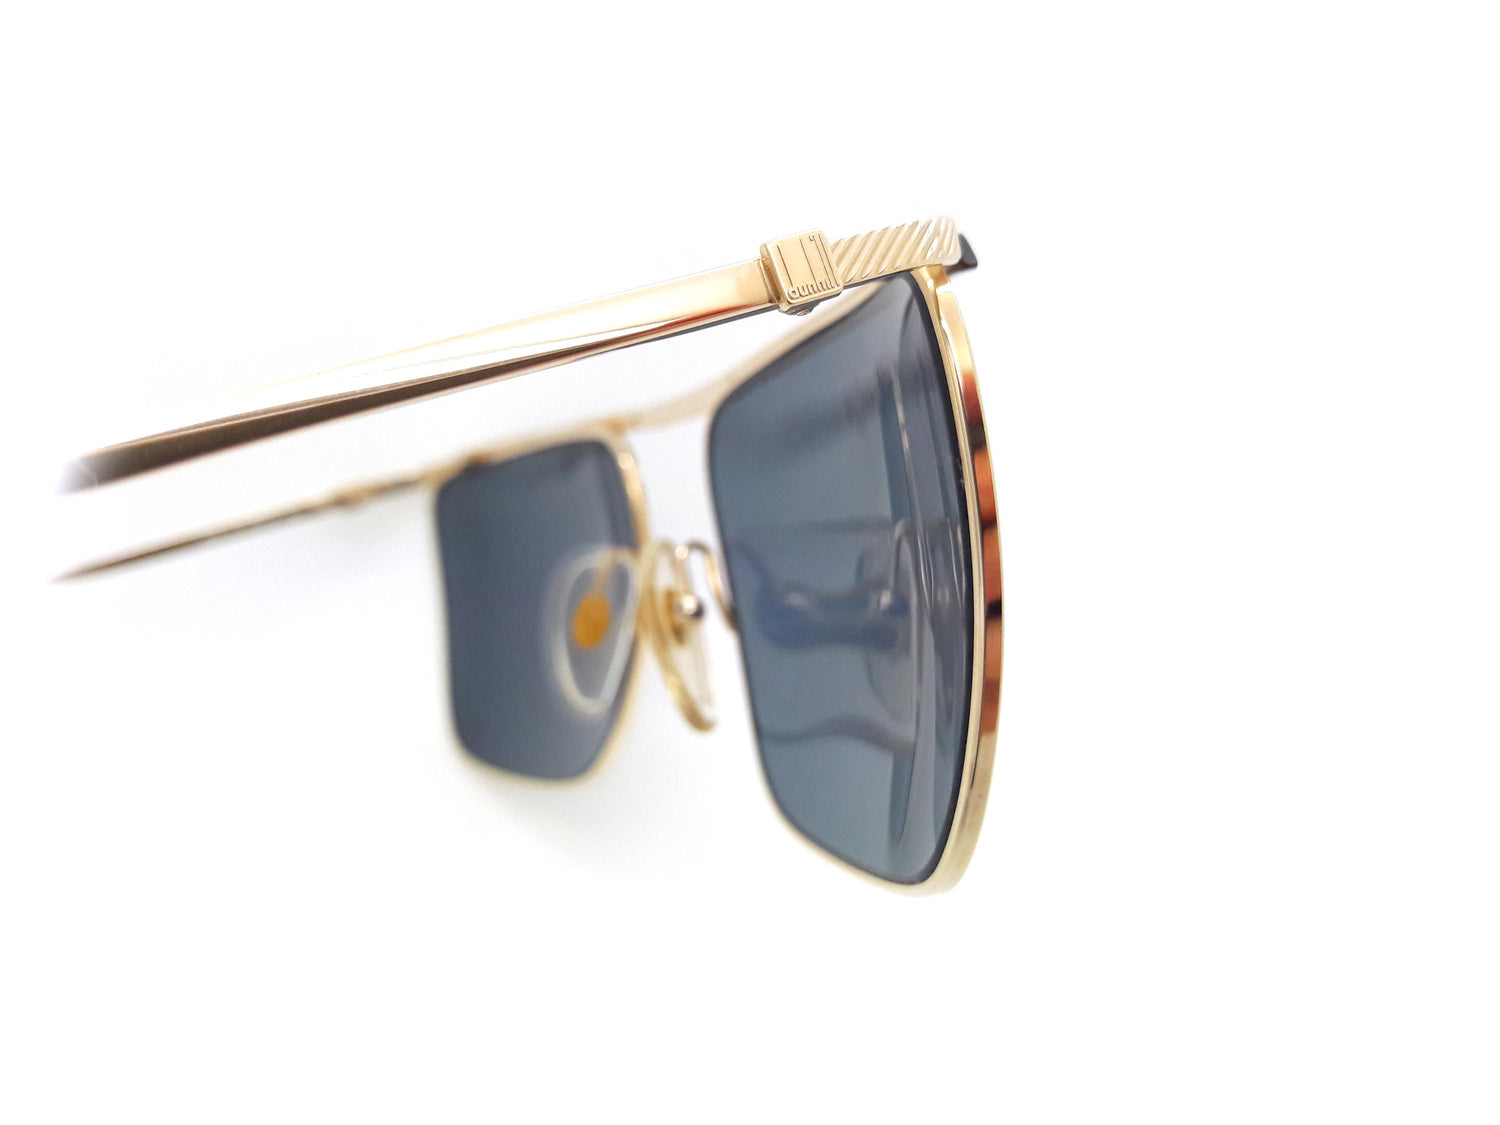 dunhill 6056 sunglasses